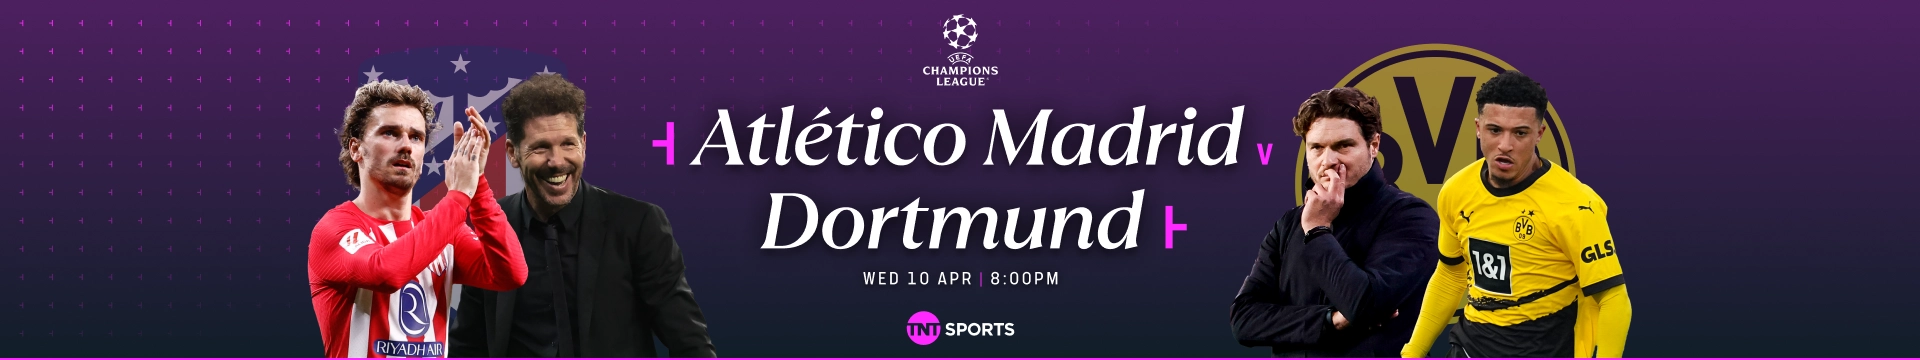 Atlético de Madrid v Dortmund Wednesday 10 April at 8pm